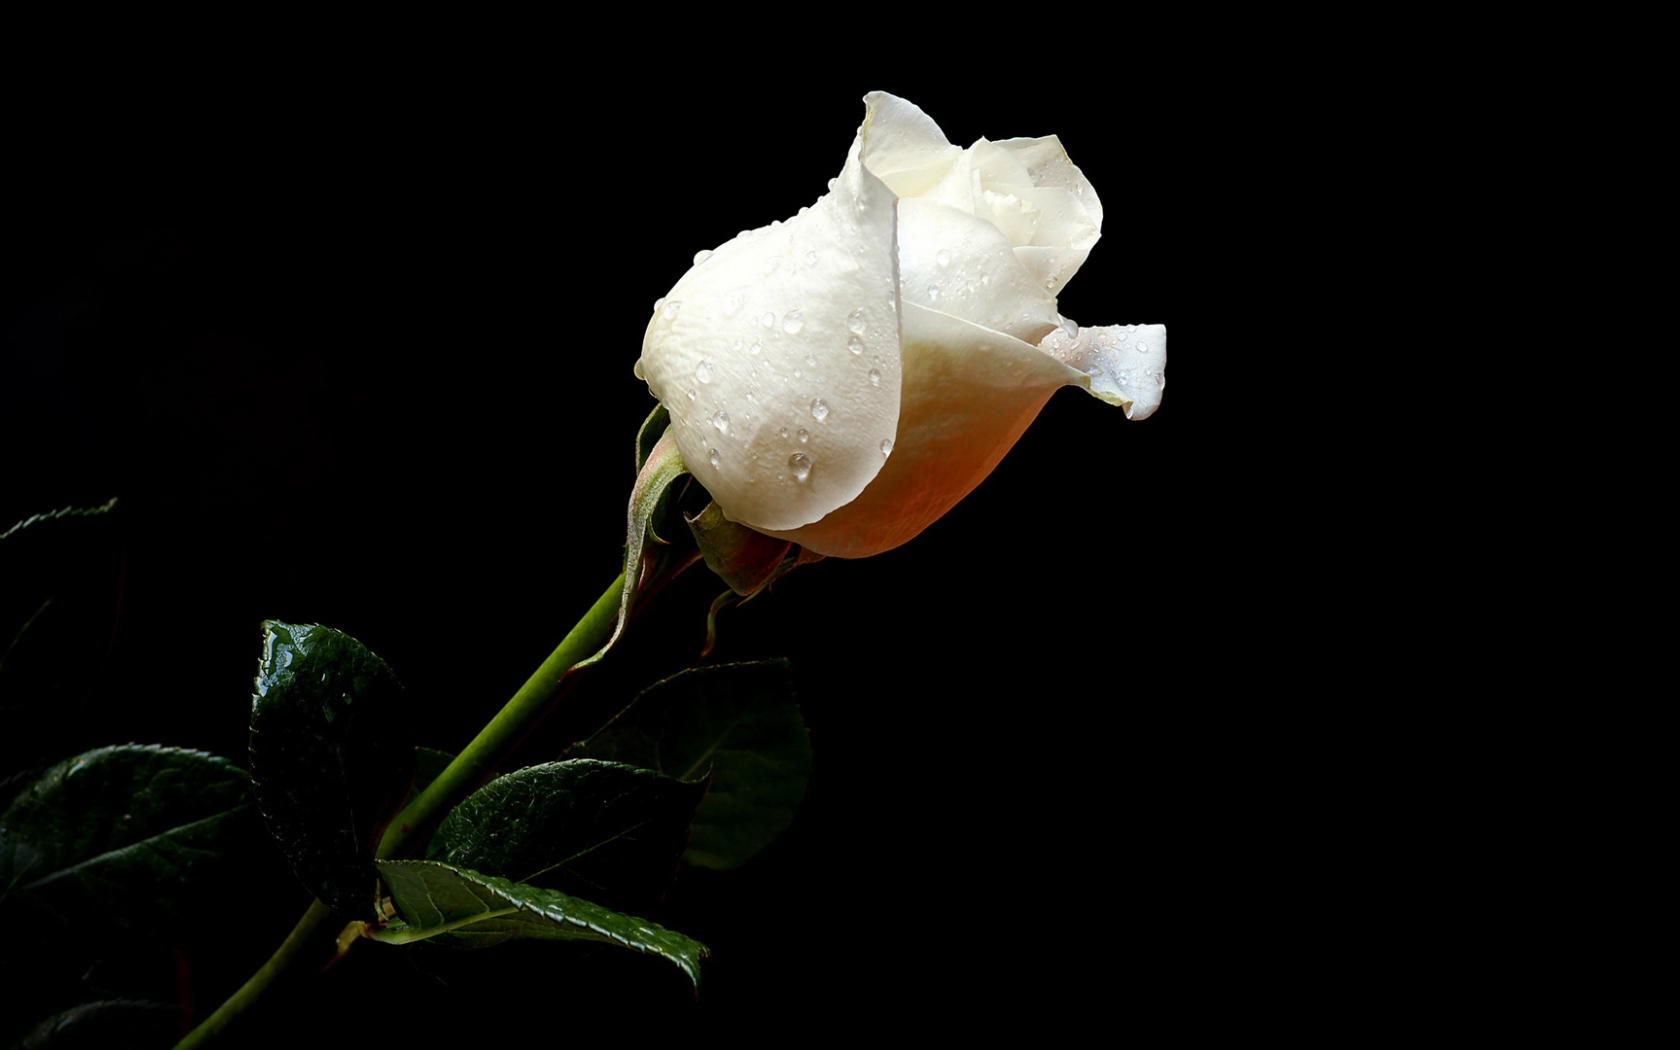 Wet white rose on a black background